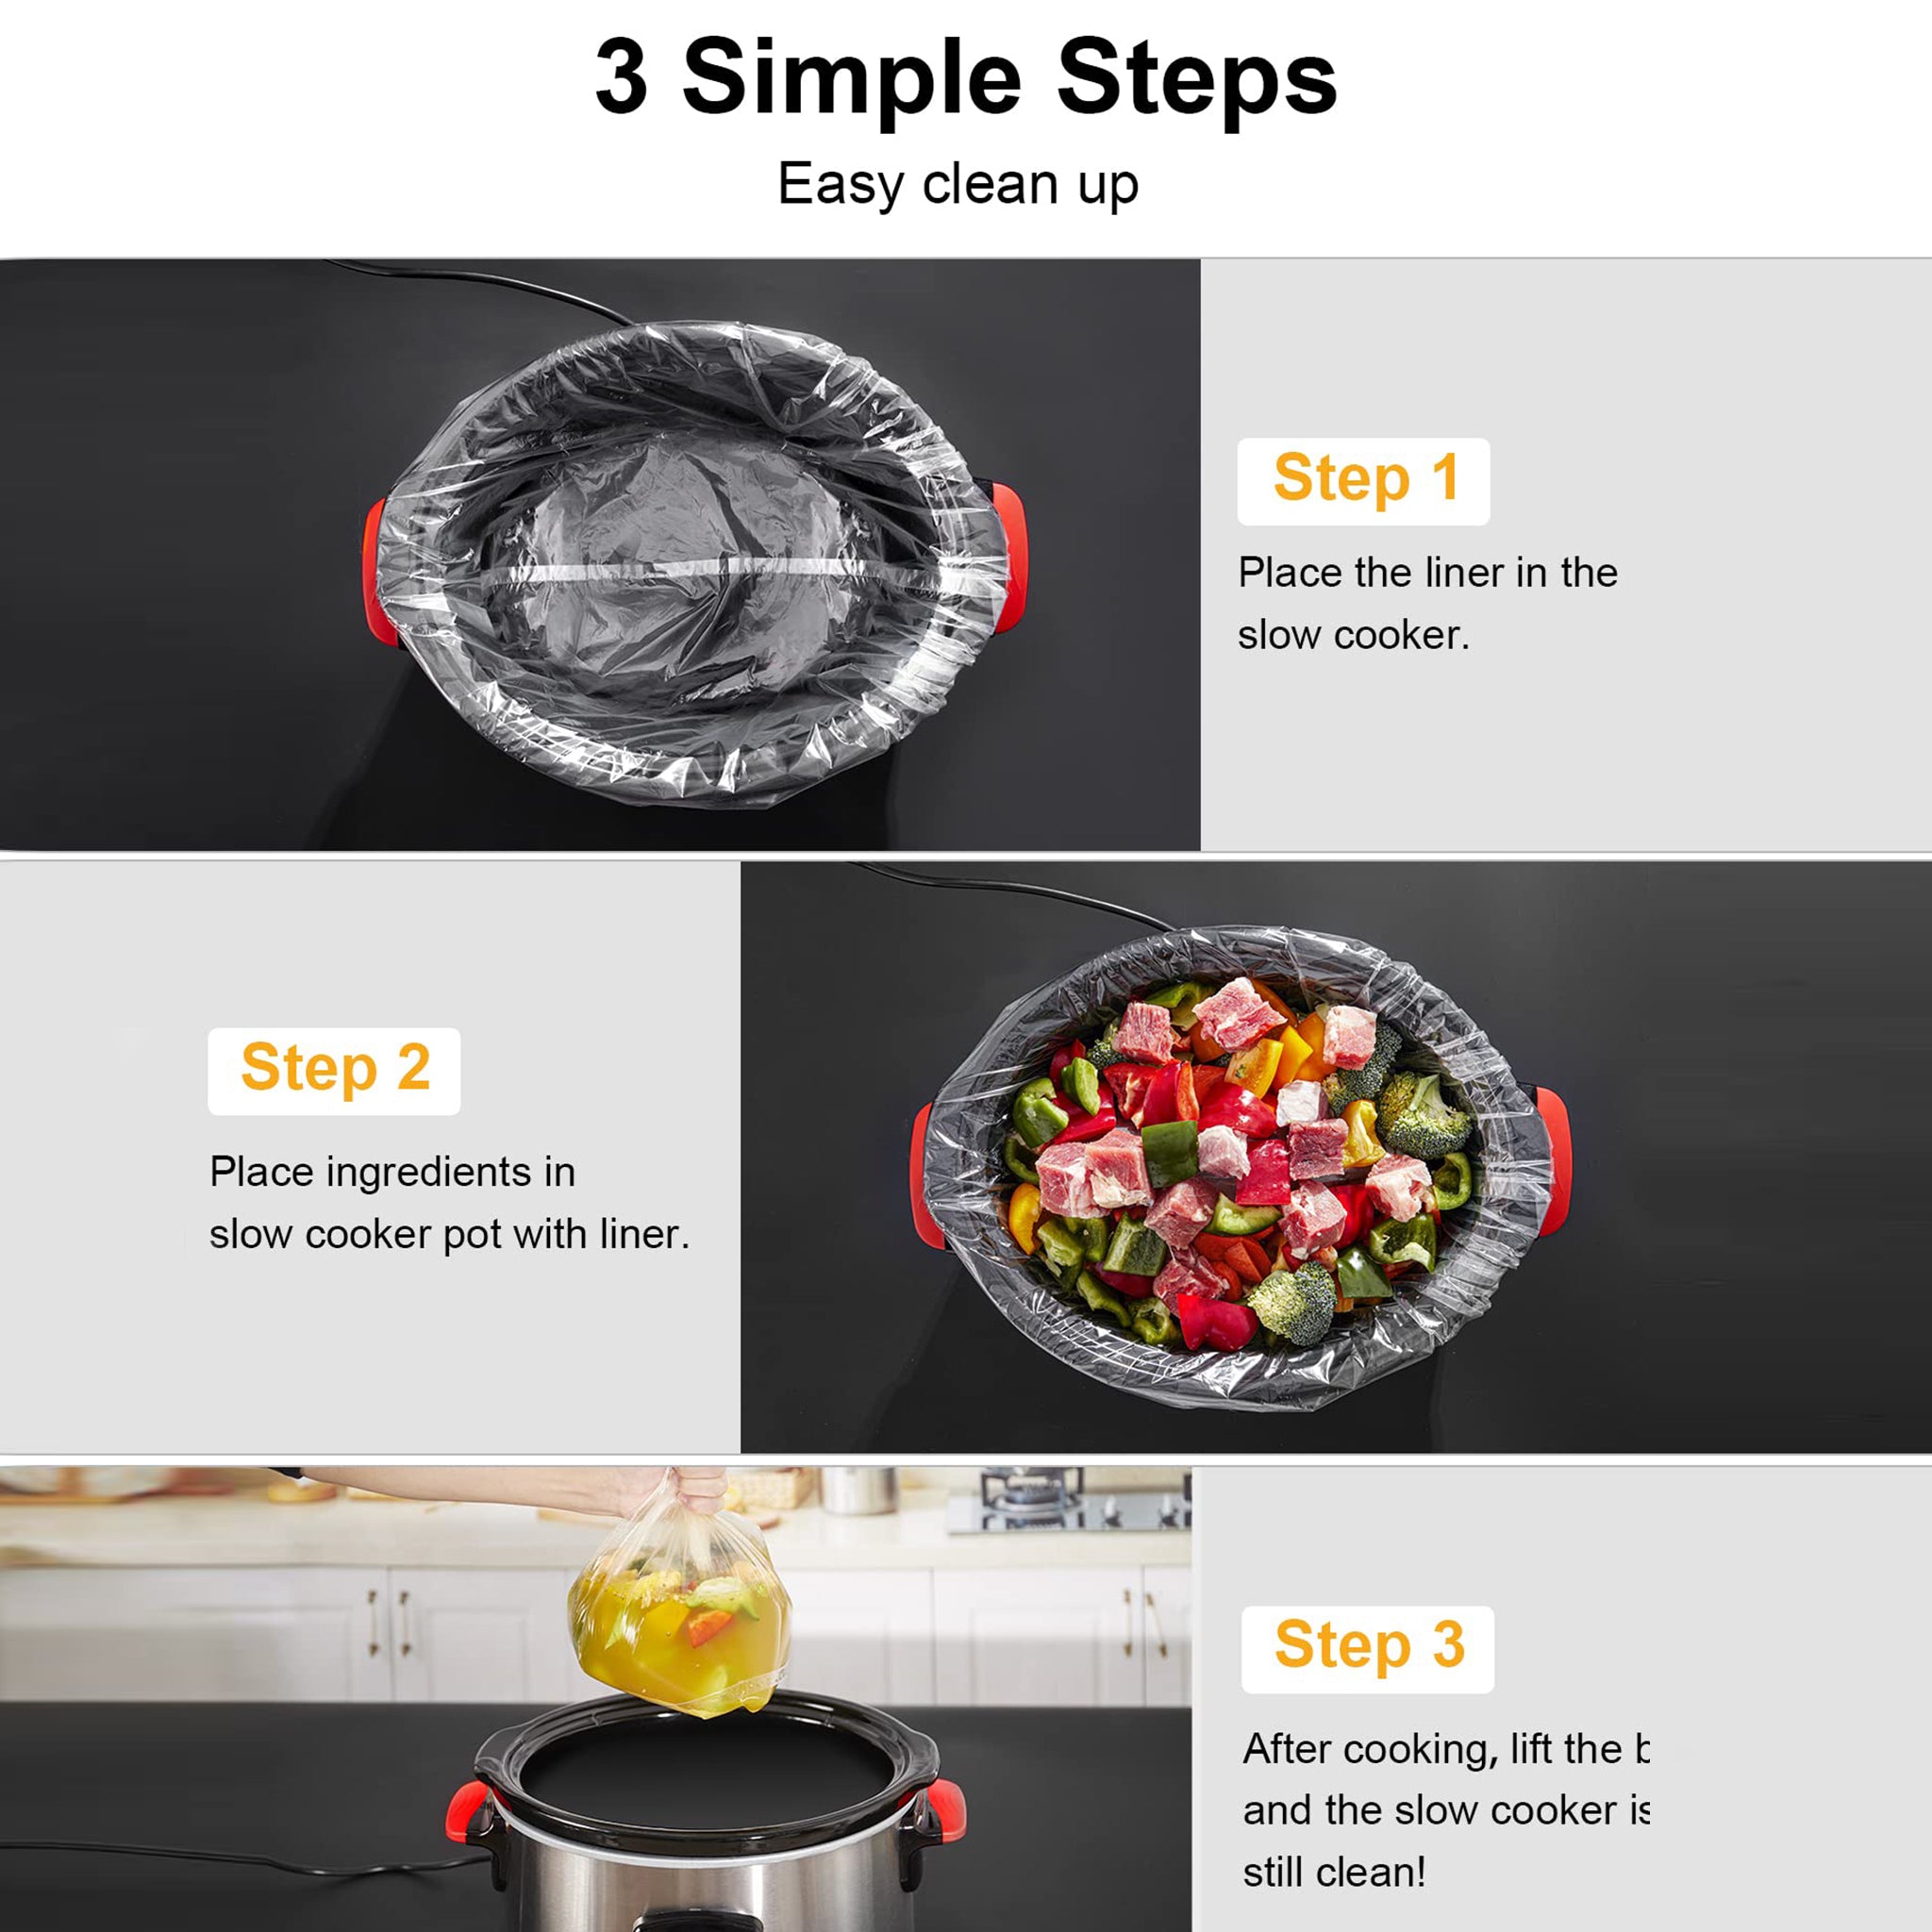 SMARTAKE Slow Cooker Liners, Crock Pot Liners 13x 15 Crockpot Liners –  SMARTAKE OFFICIAL